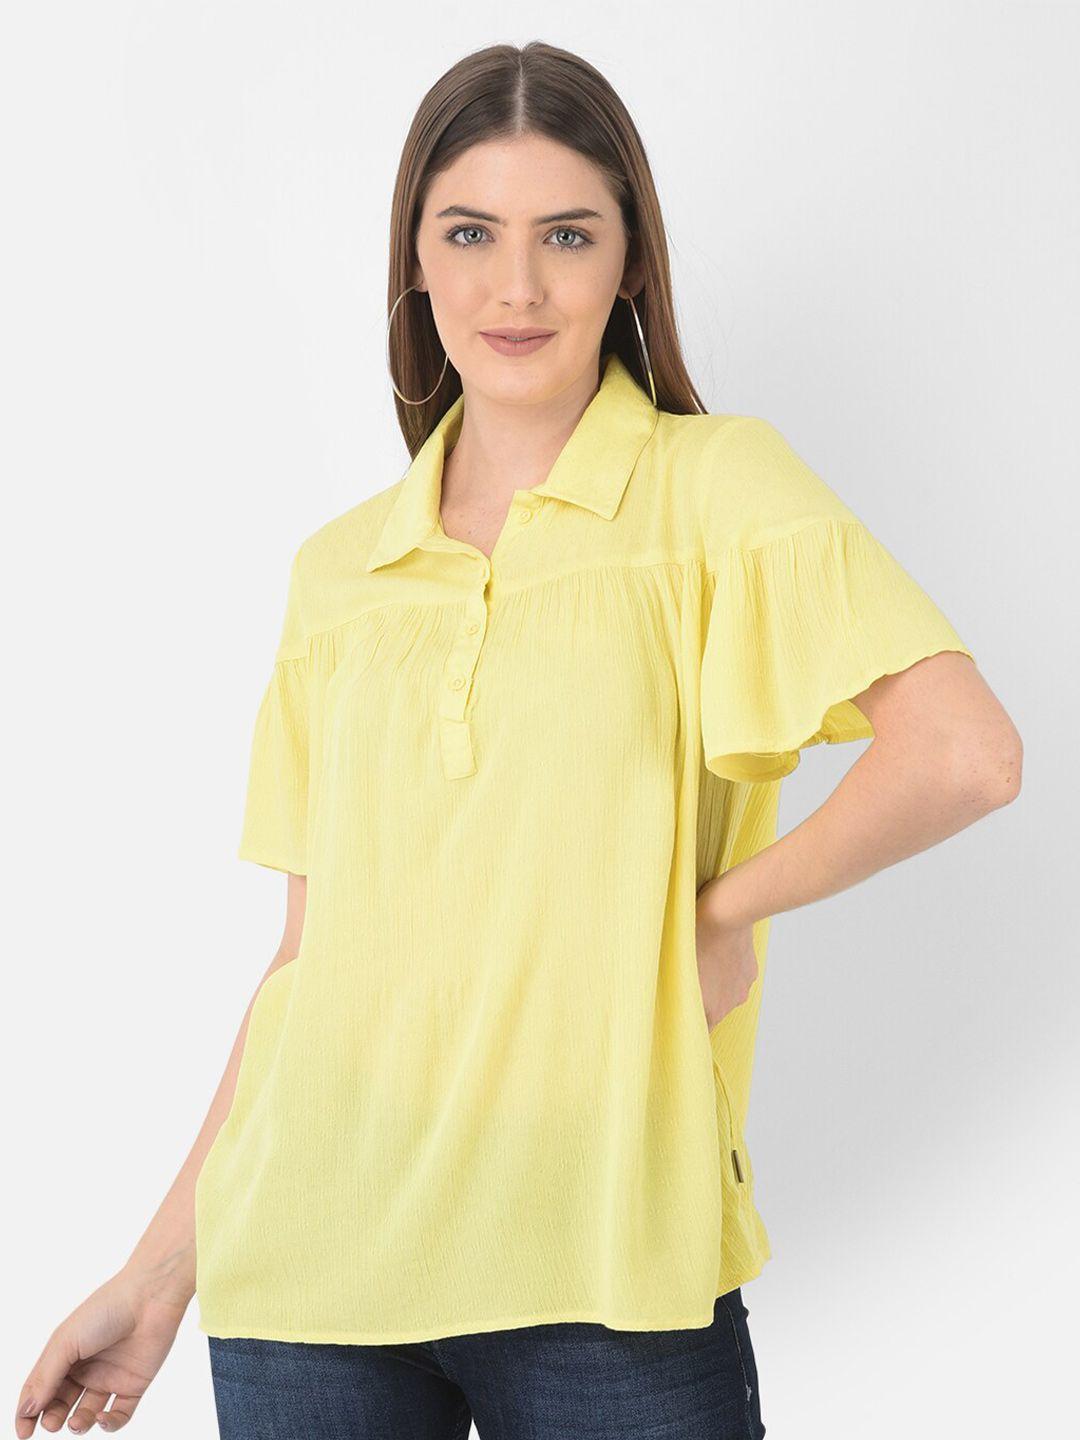 crimsoune club women yellow shirt style top